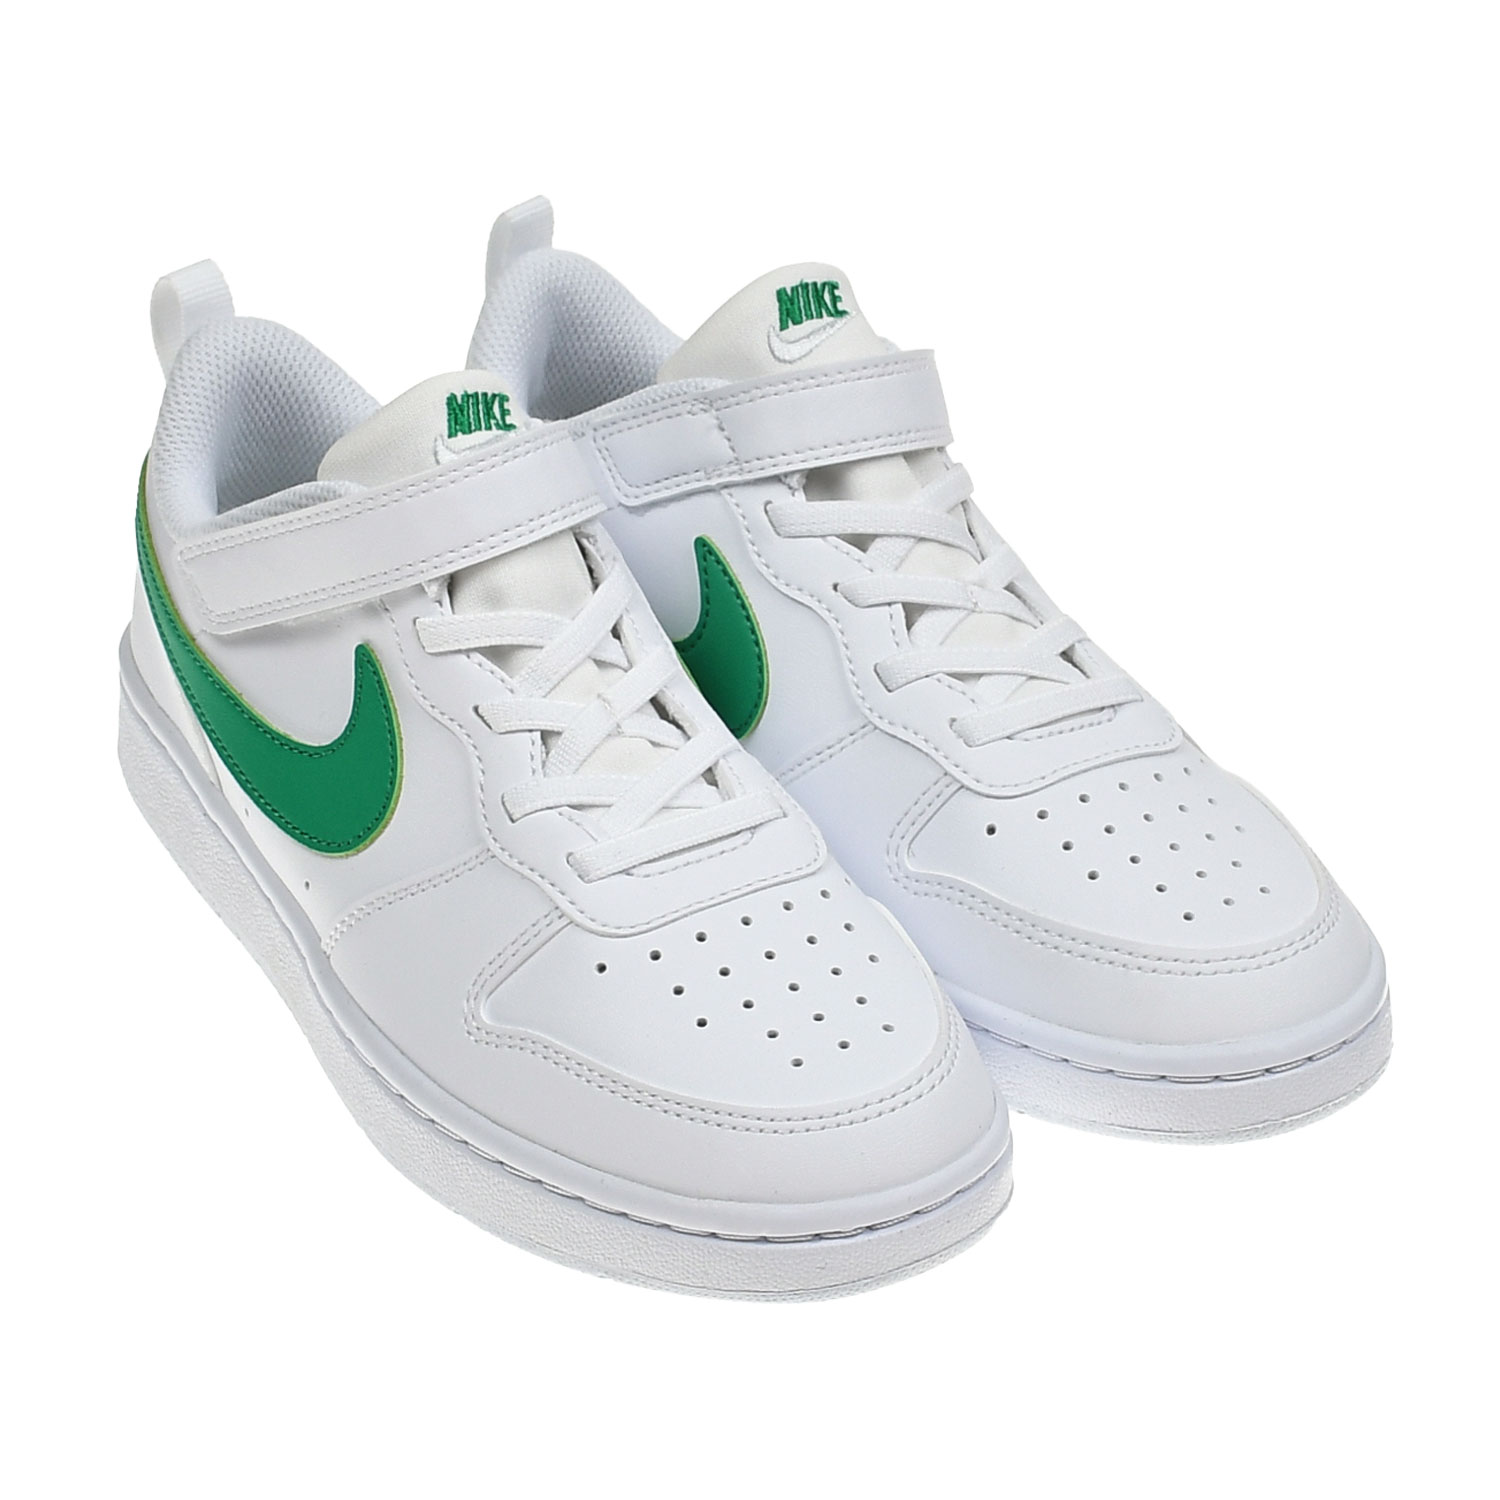 Кеды на липучках с зеленым логотипом, белые Nike, размер 29, цвет нет цвета